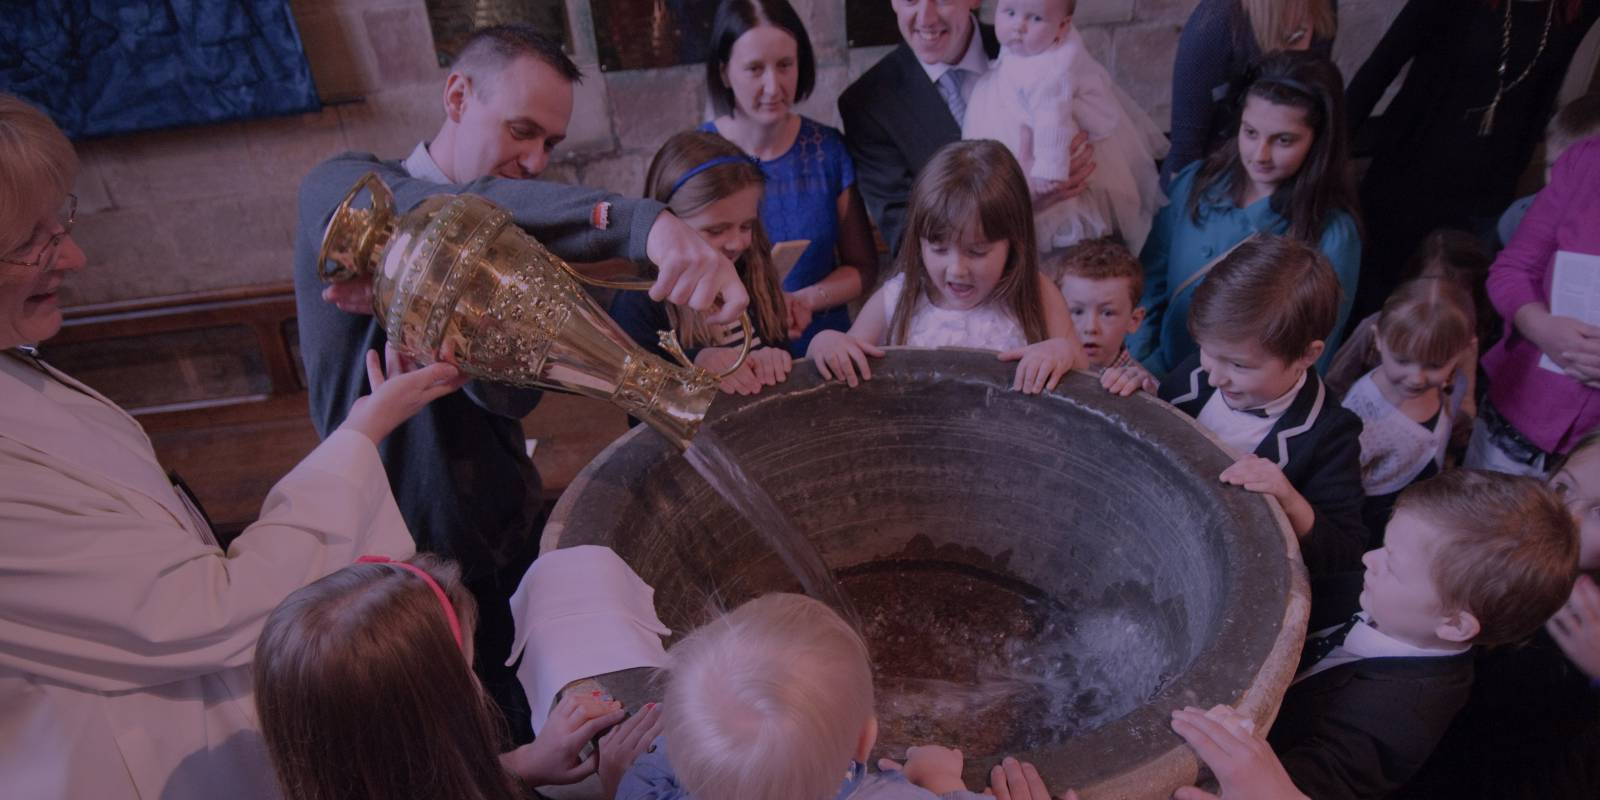 Children surrounding font, vicar pours in water